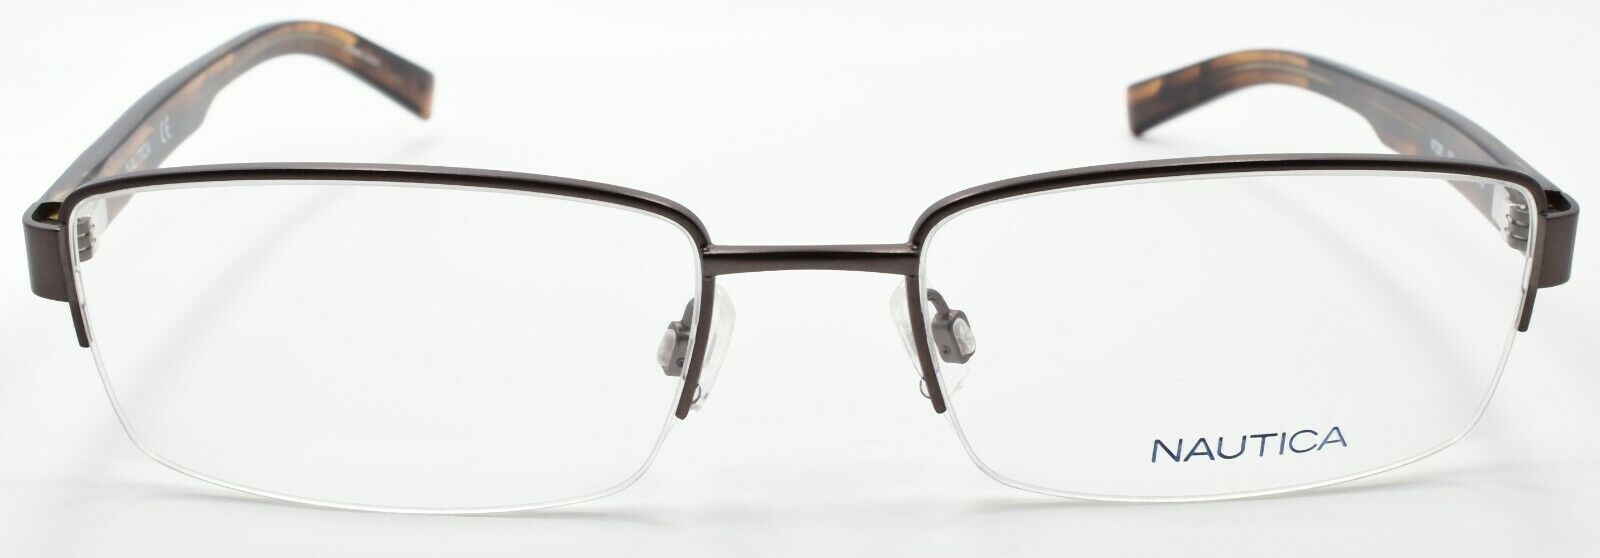 2-Nautica N7286 030 Men's Eyeglasses Frames Half-rim 57-19-145 Matte Gunmetal-688940459036-IKSpecs